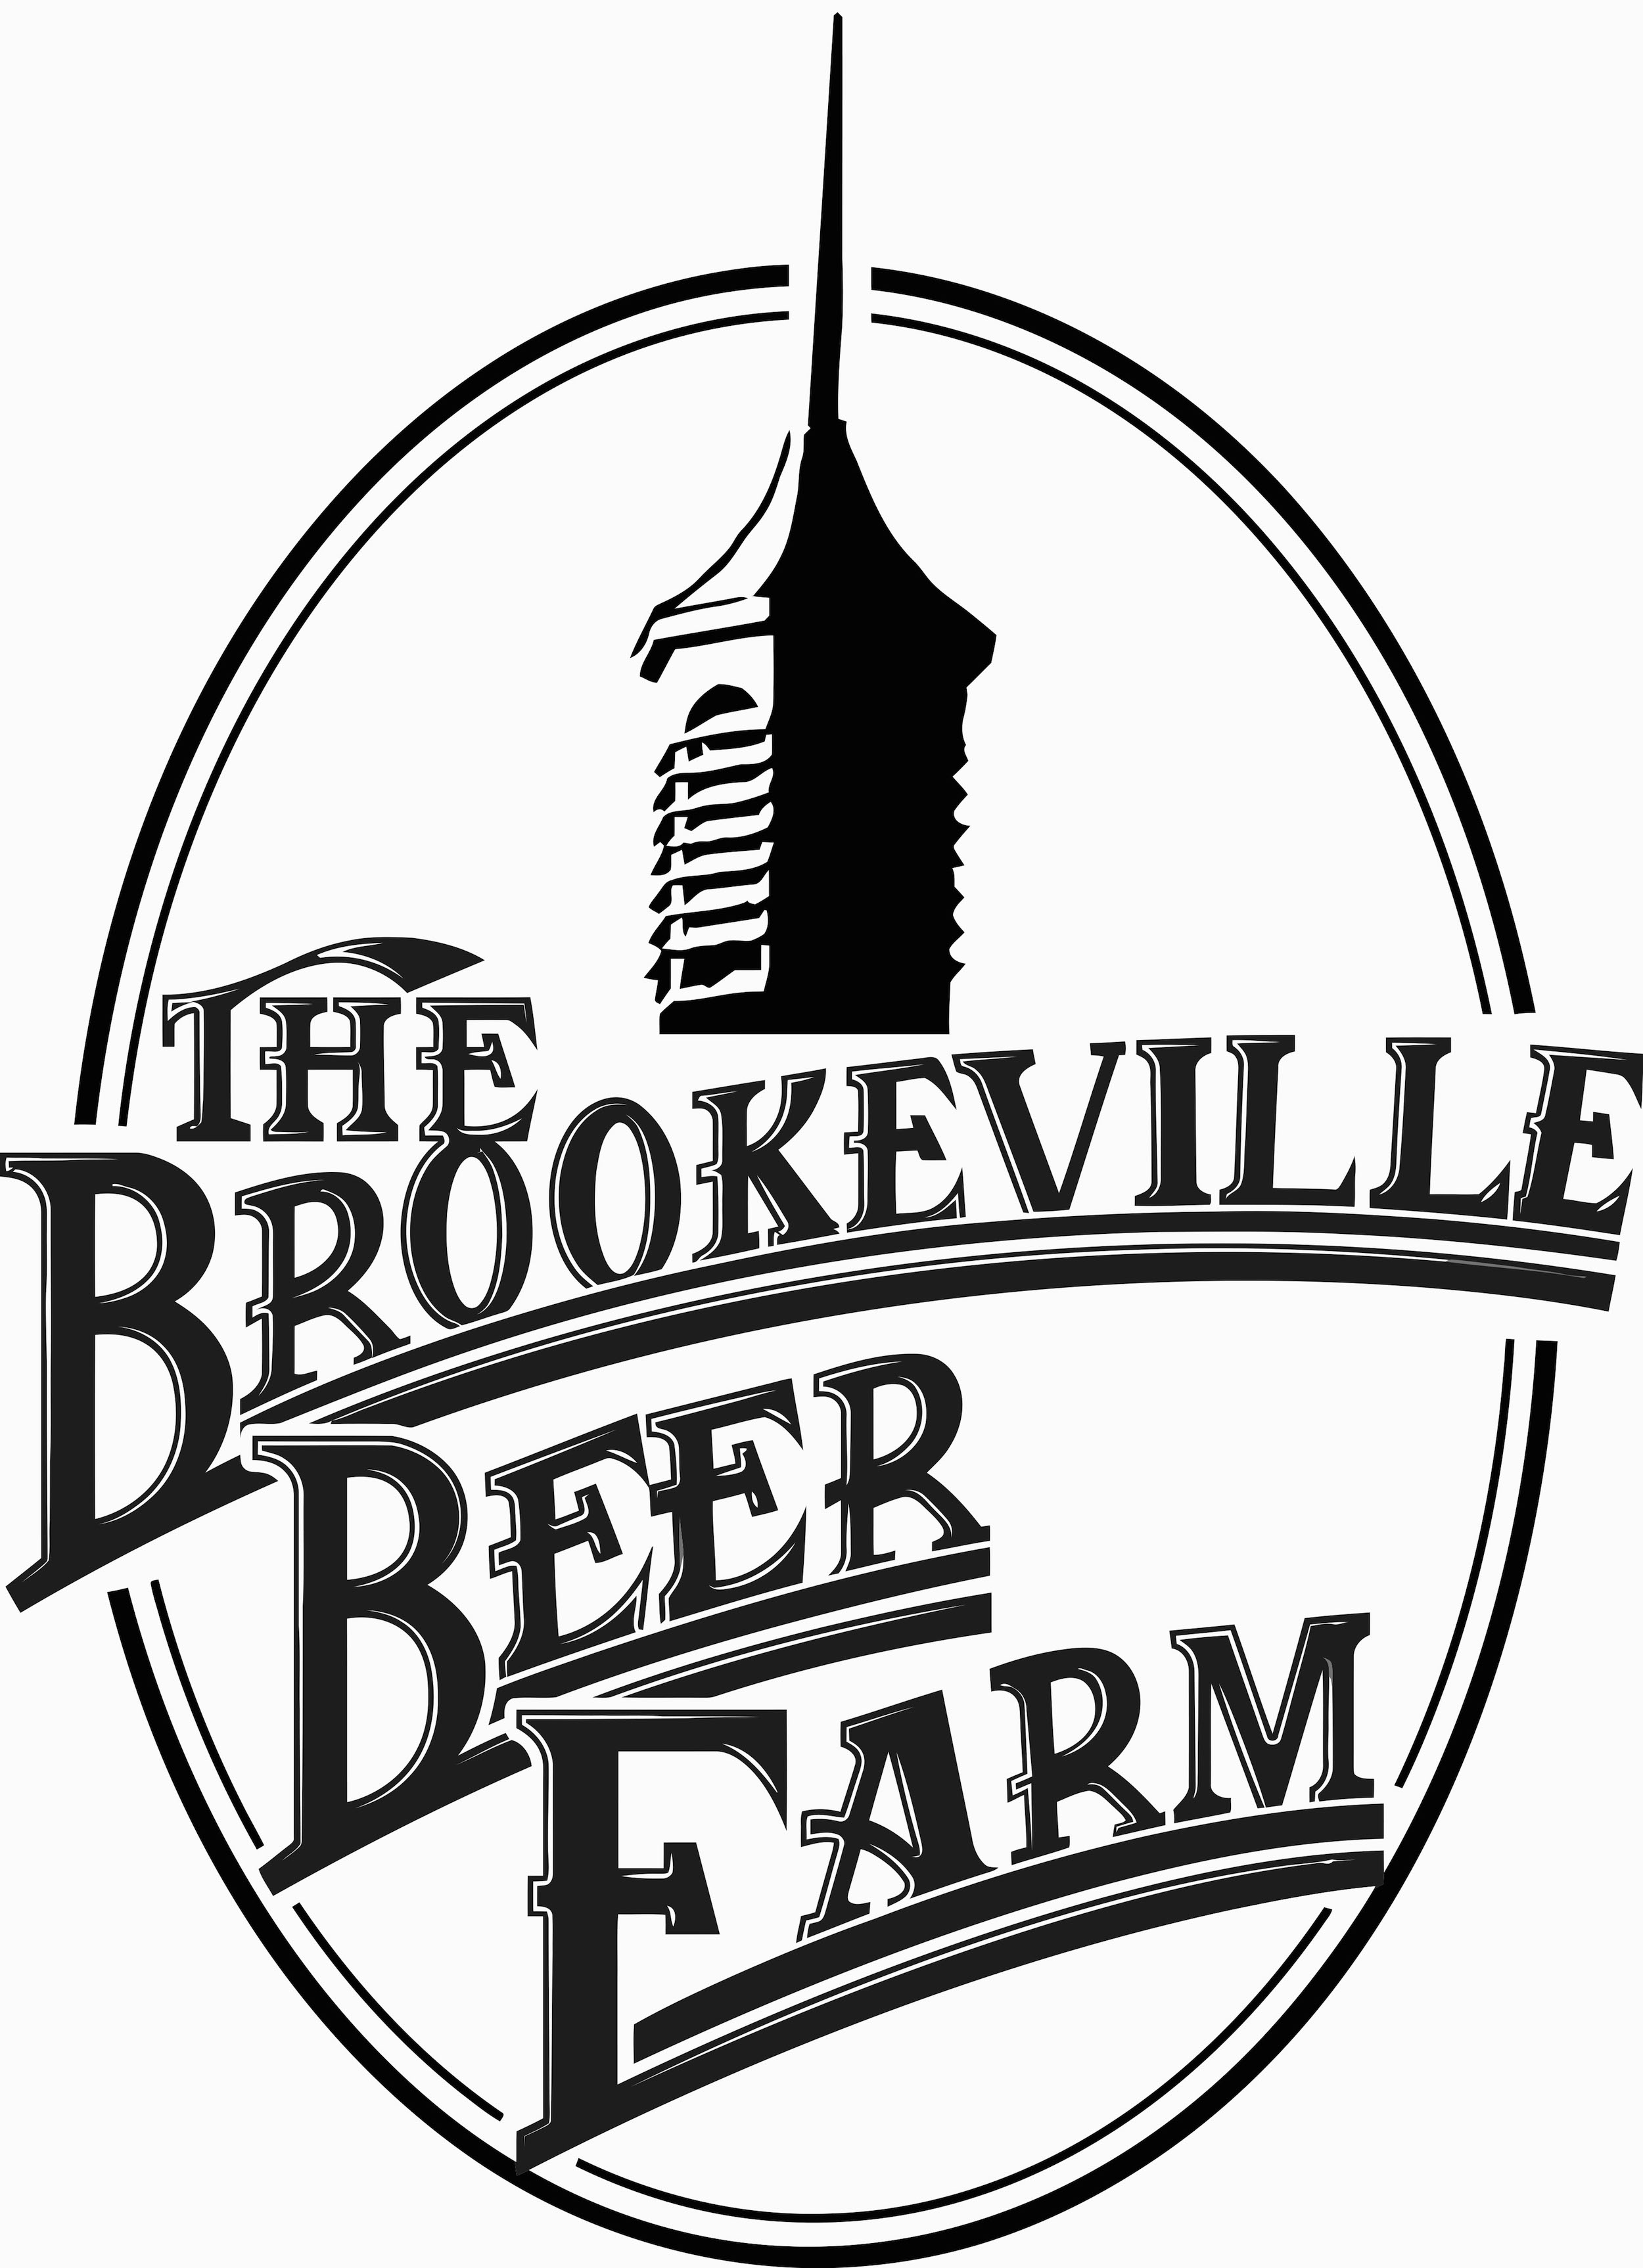 Brookeville Beer Farm